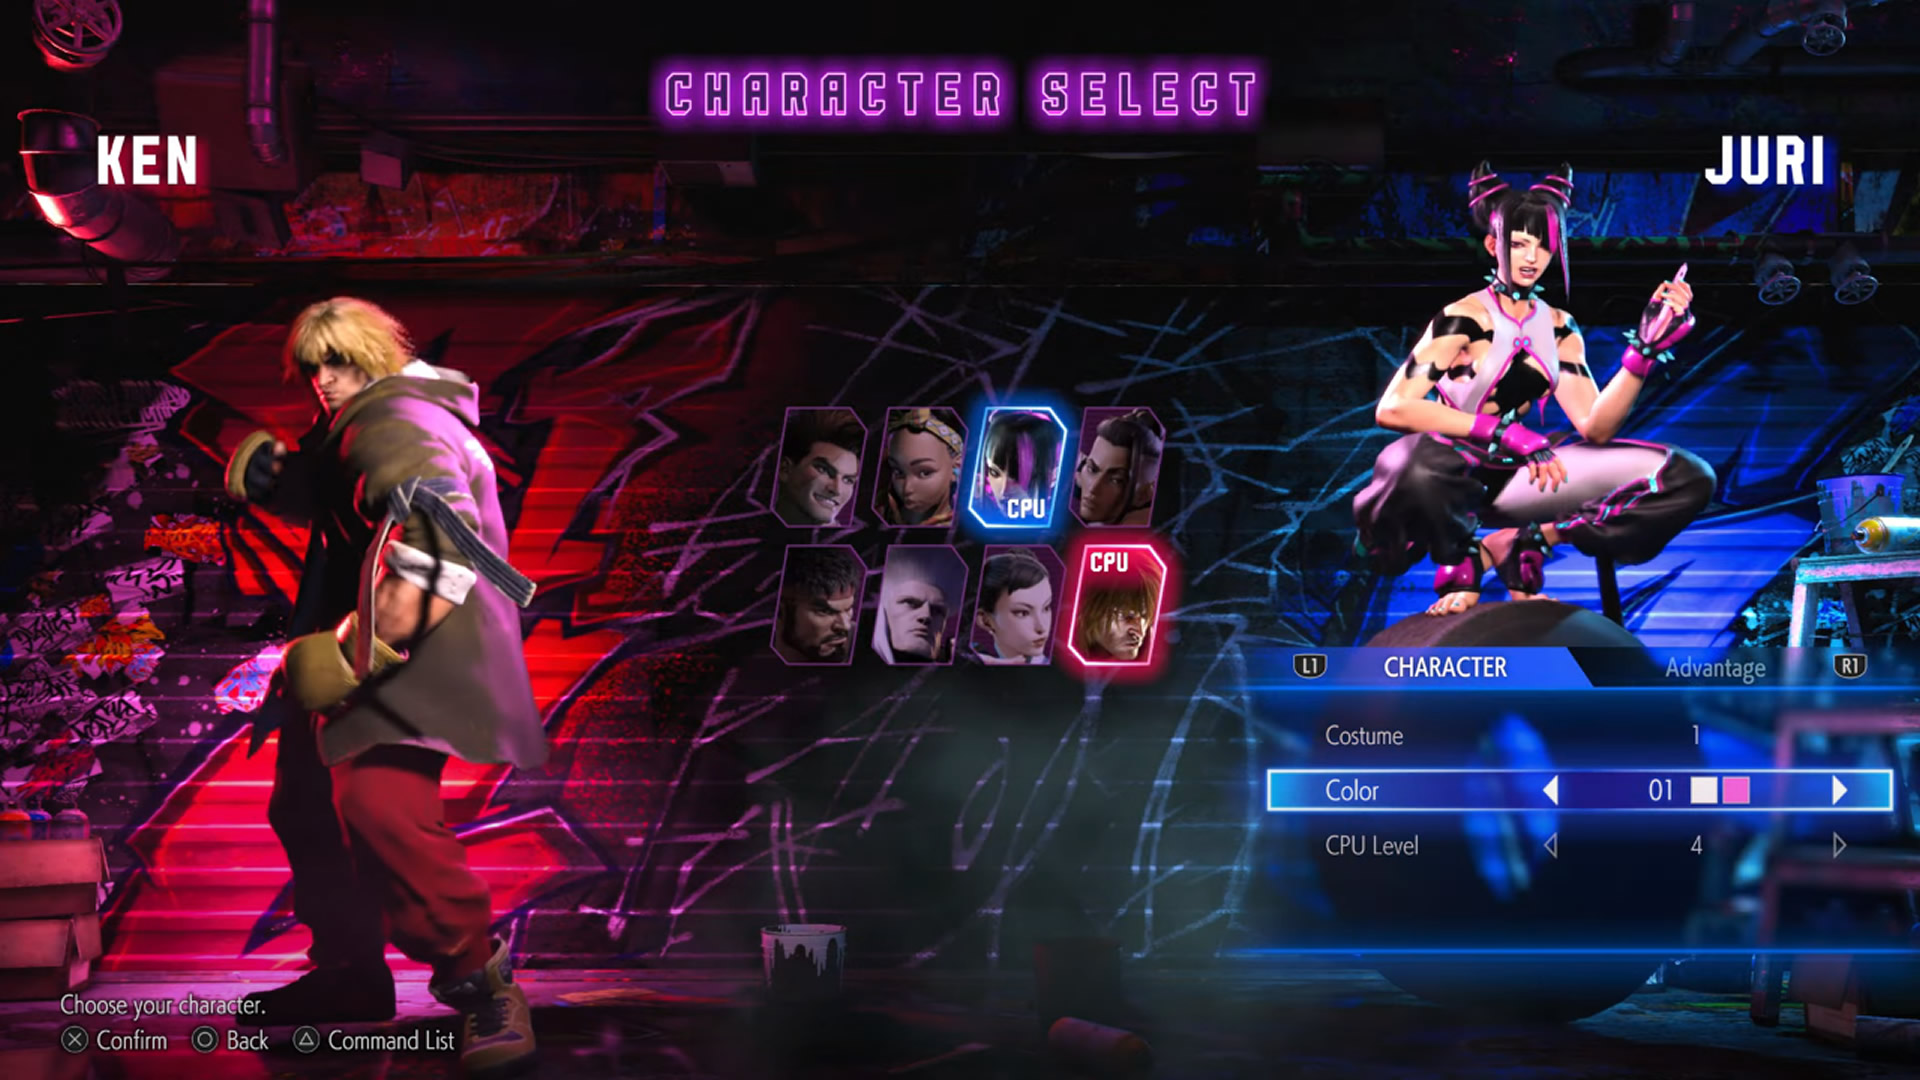 Stage One: Monte seu elenco em Tekken vs Street Fighter